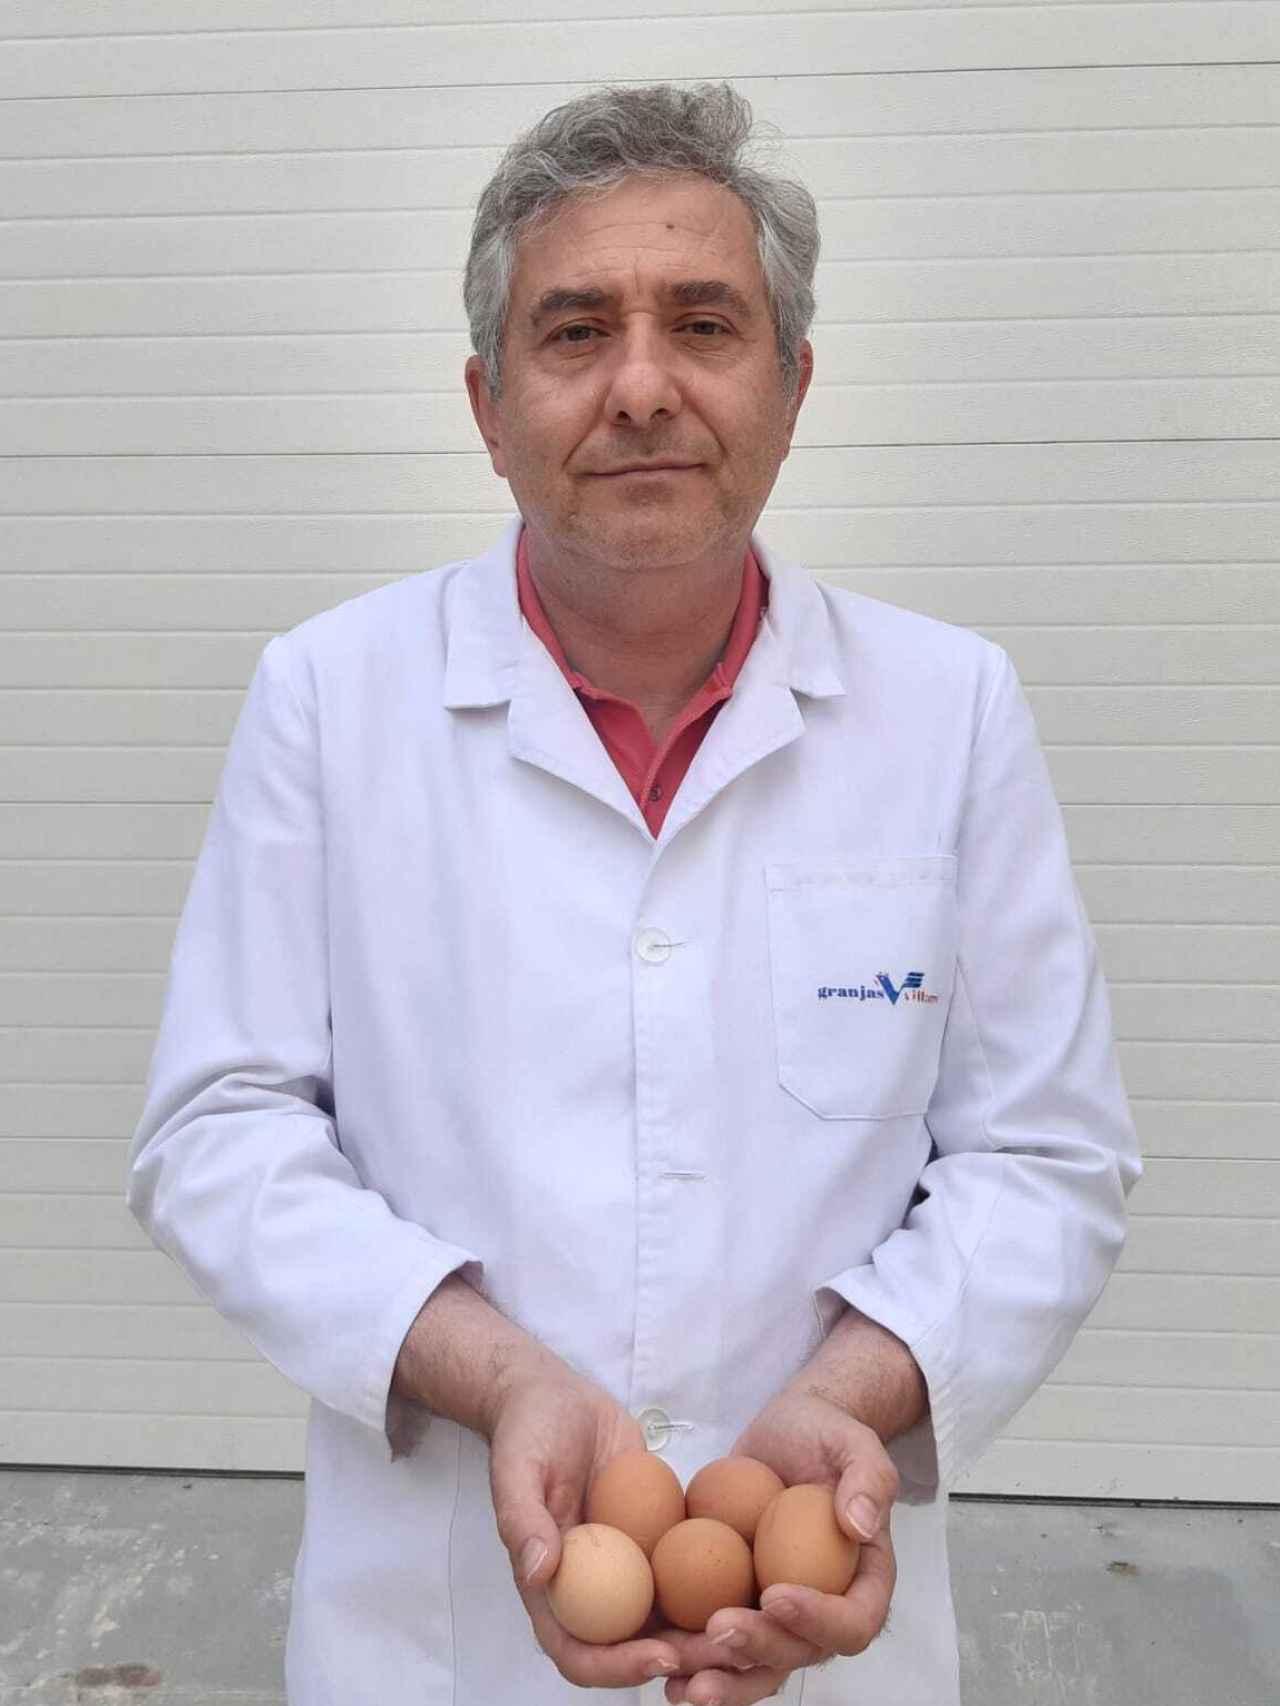 Jaime Villarreal, CEO de Granjas Villarreal, en Meco (Madrid).